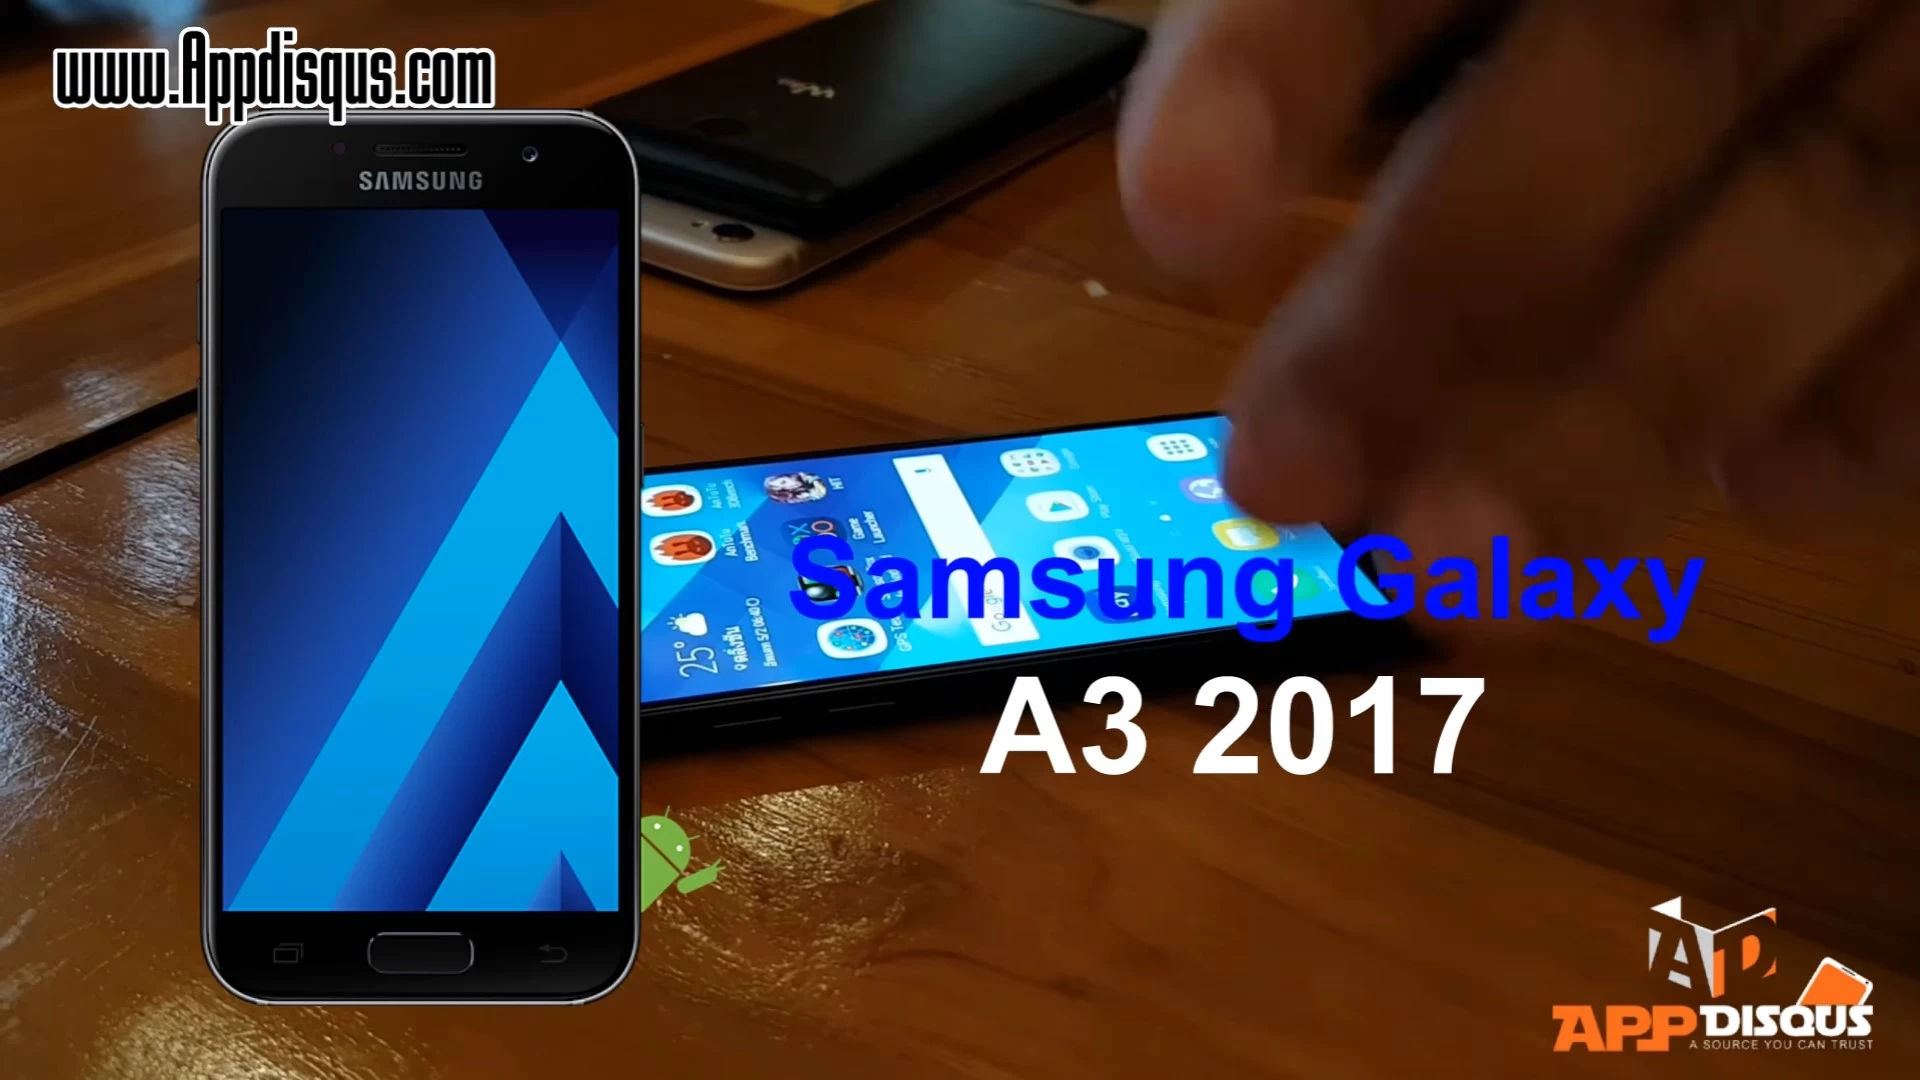 samsung galaxy a3 2017 appdisqus | appdisqus hangout | คลิปรีวิวรุมวิจารณ์ Samsung Galaxy A3 2017 คุยเล่นๆ เป็นกับแกล้ม ^^